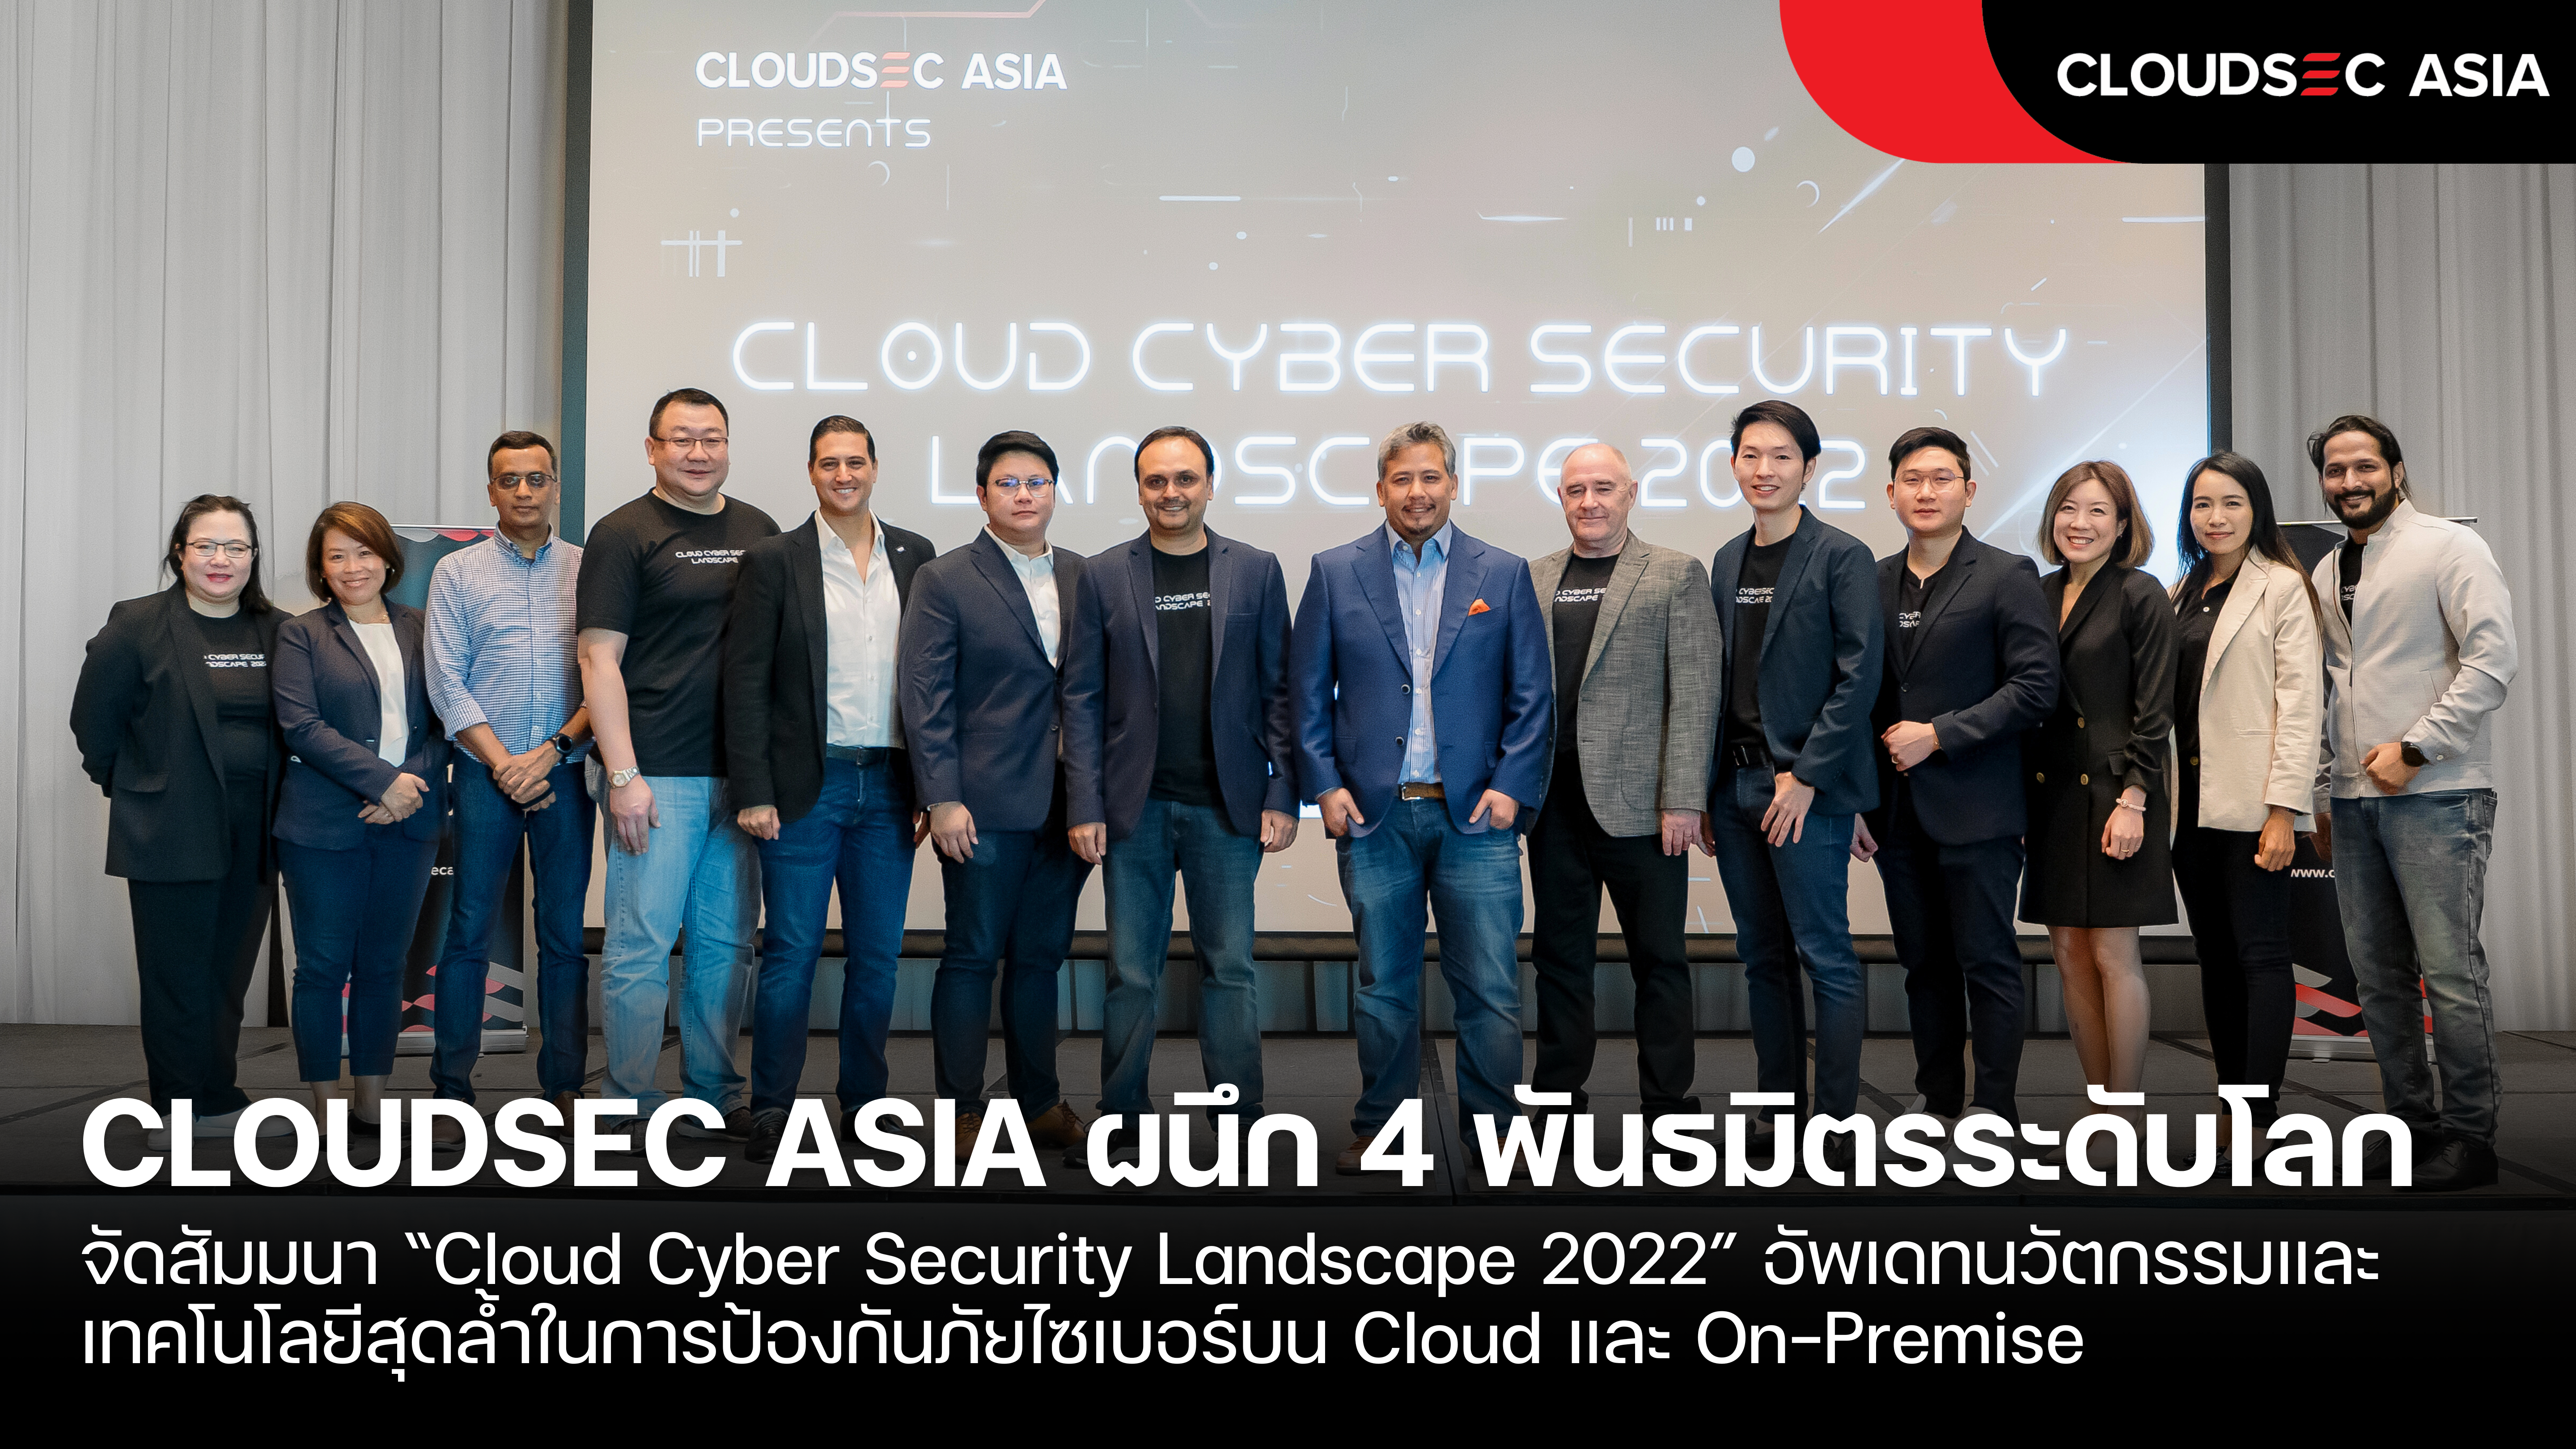 “CLOUDSEC ASIA ผนึก 4 พันธมิตรระดับโลก” จัดสัมมนา “Cloud Cyber Security Landscape 2022”